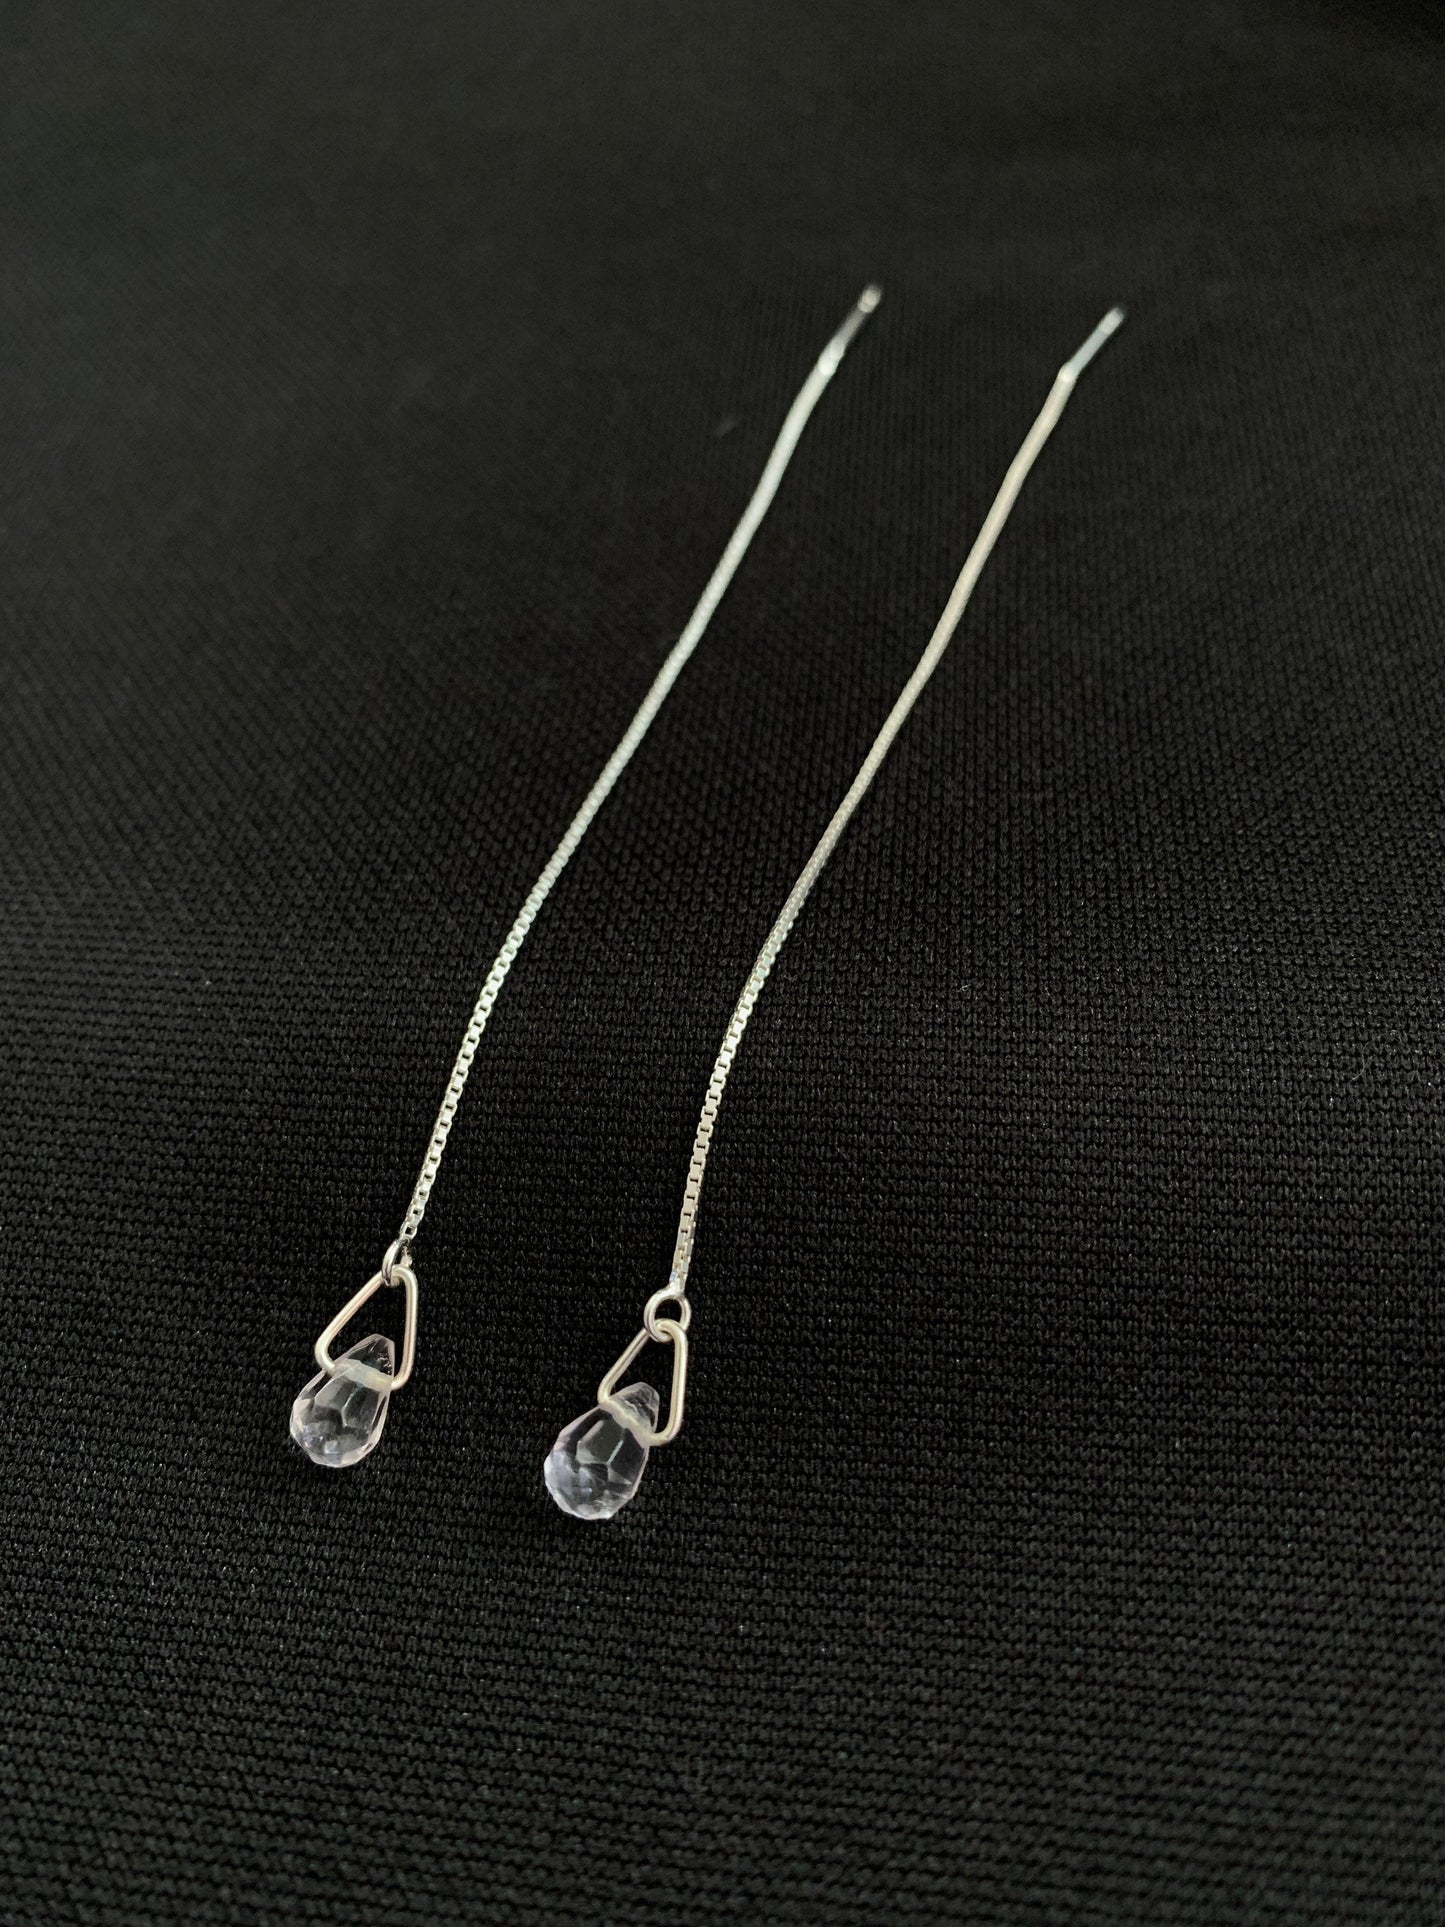 Sterling Silver Ear Threads with Small Amethyst Tear Drops  Minimalist Earrings